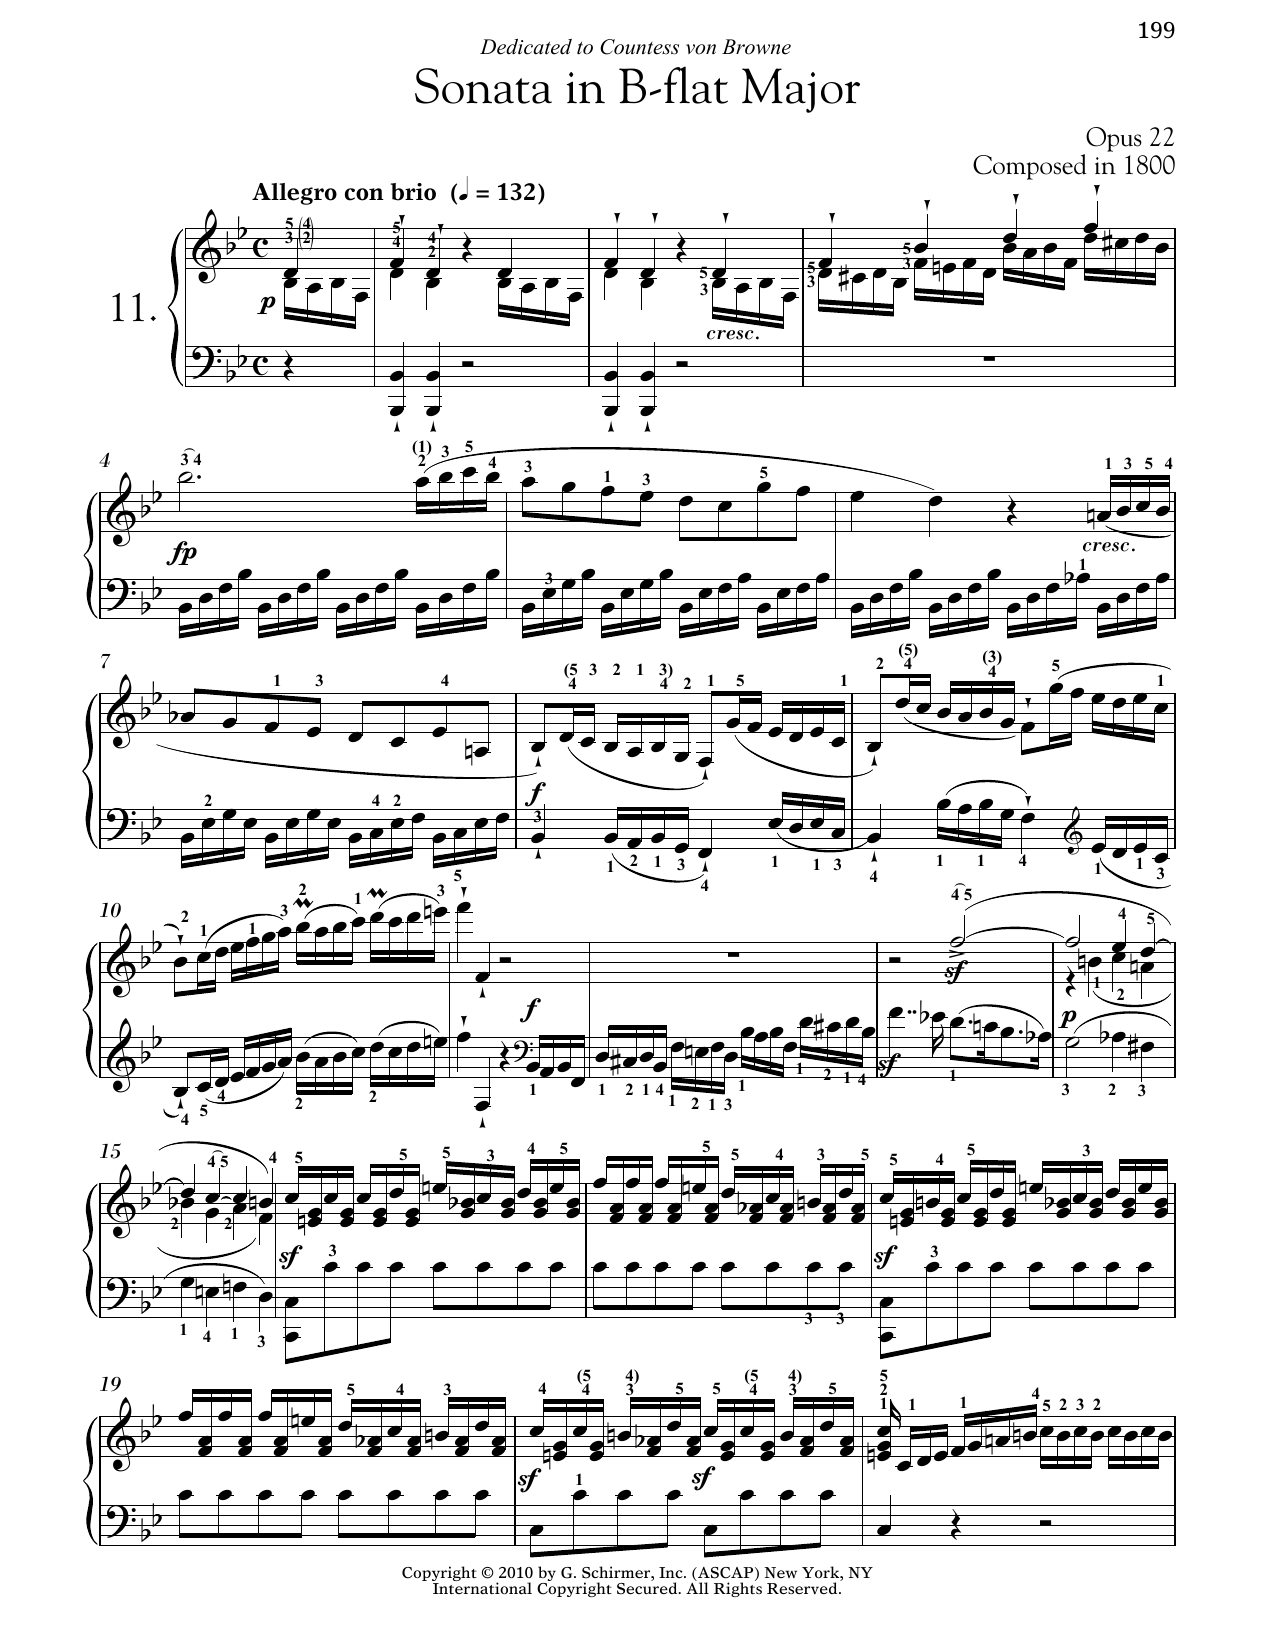 Ludwig van Beethoven Piano Sonata No. 11 In B-flat Major, Op. 22 Sheet Music Notes & Chords for Piano - Download or Print PDF